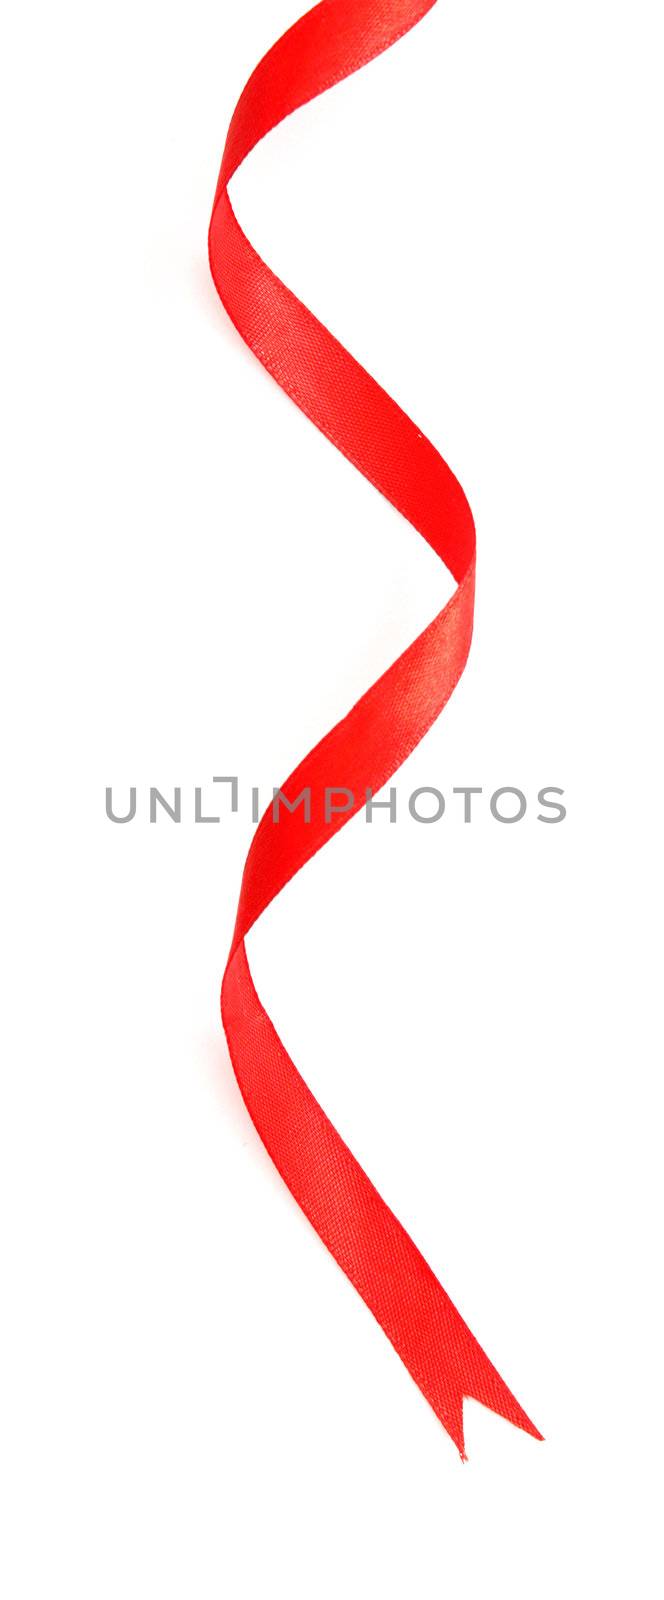 Red ribbon by leeser